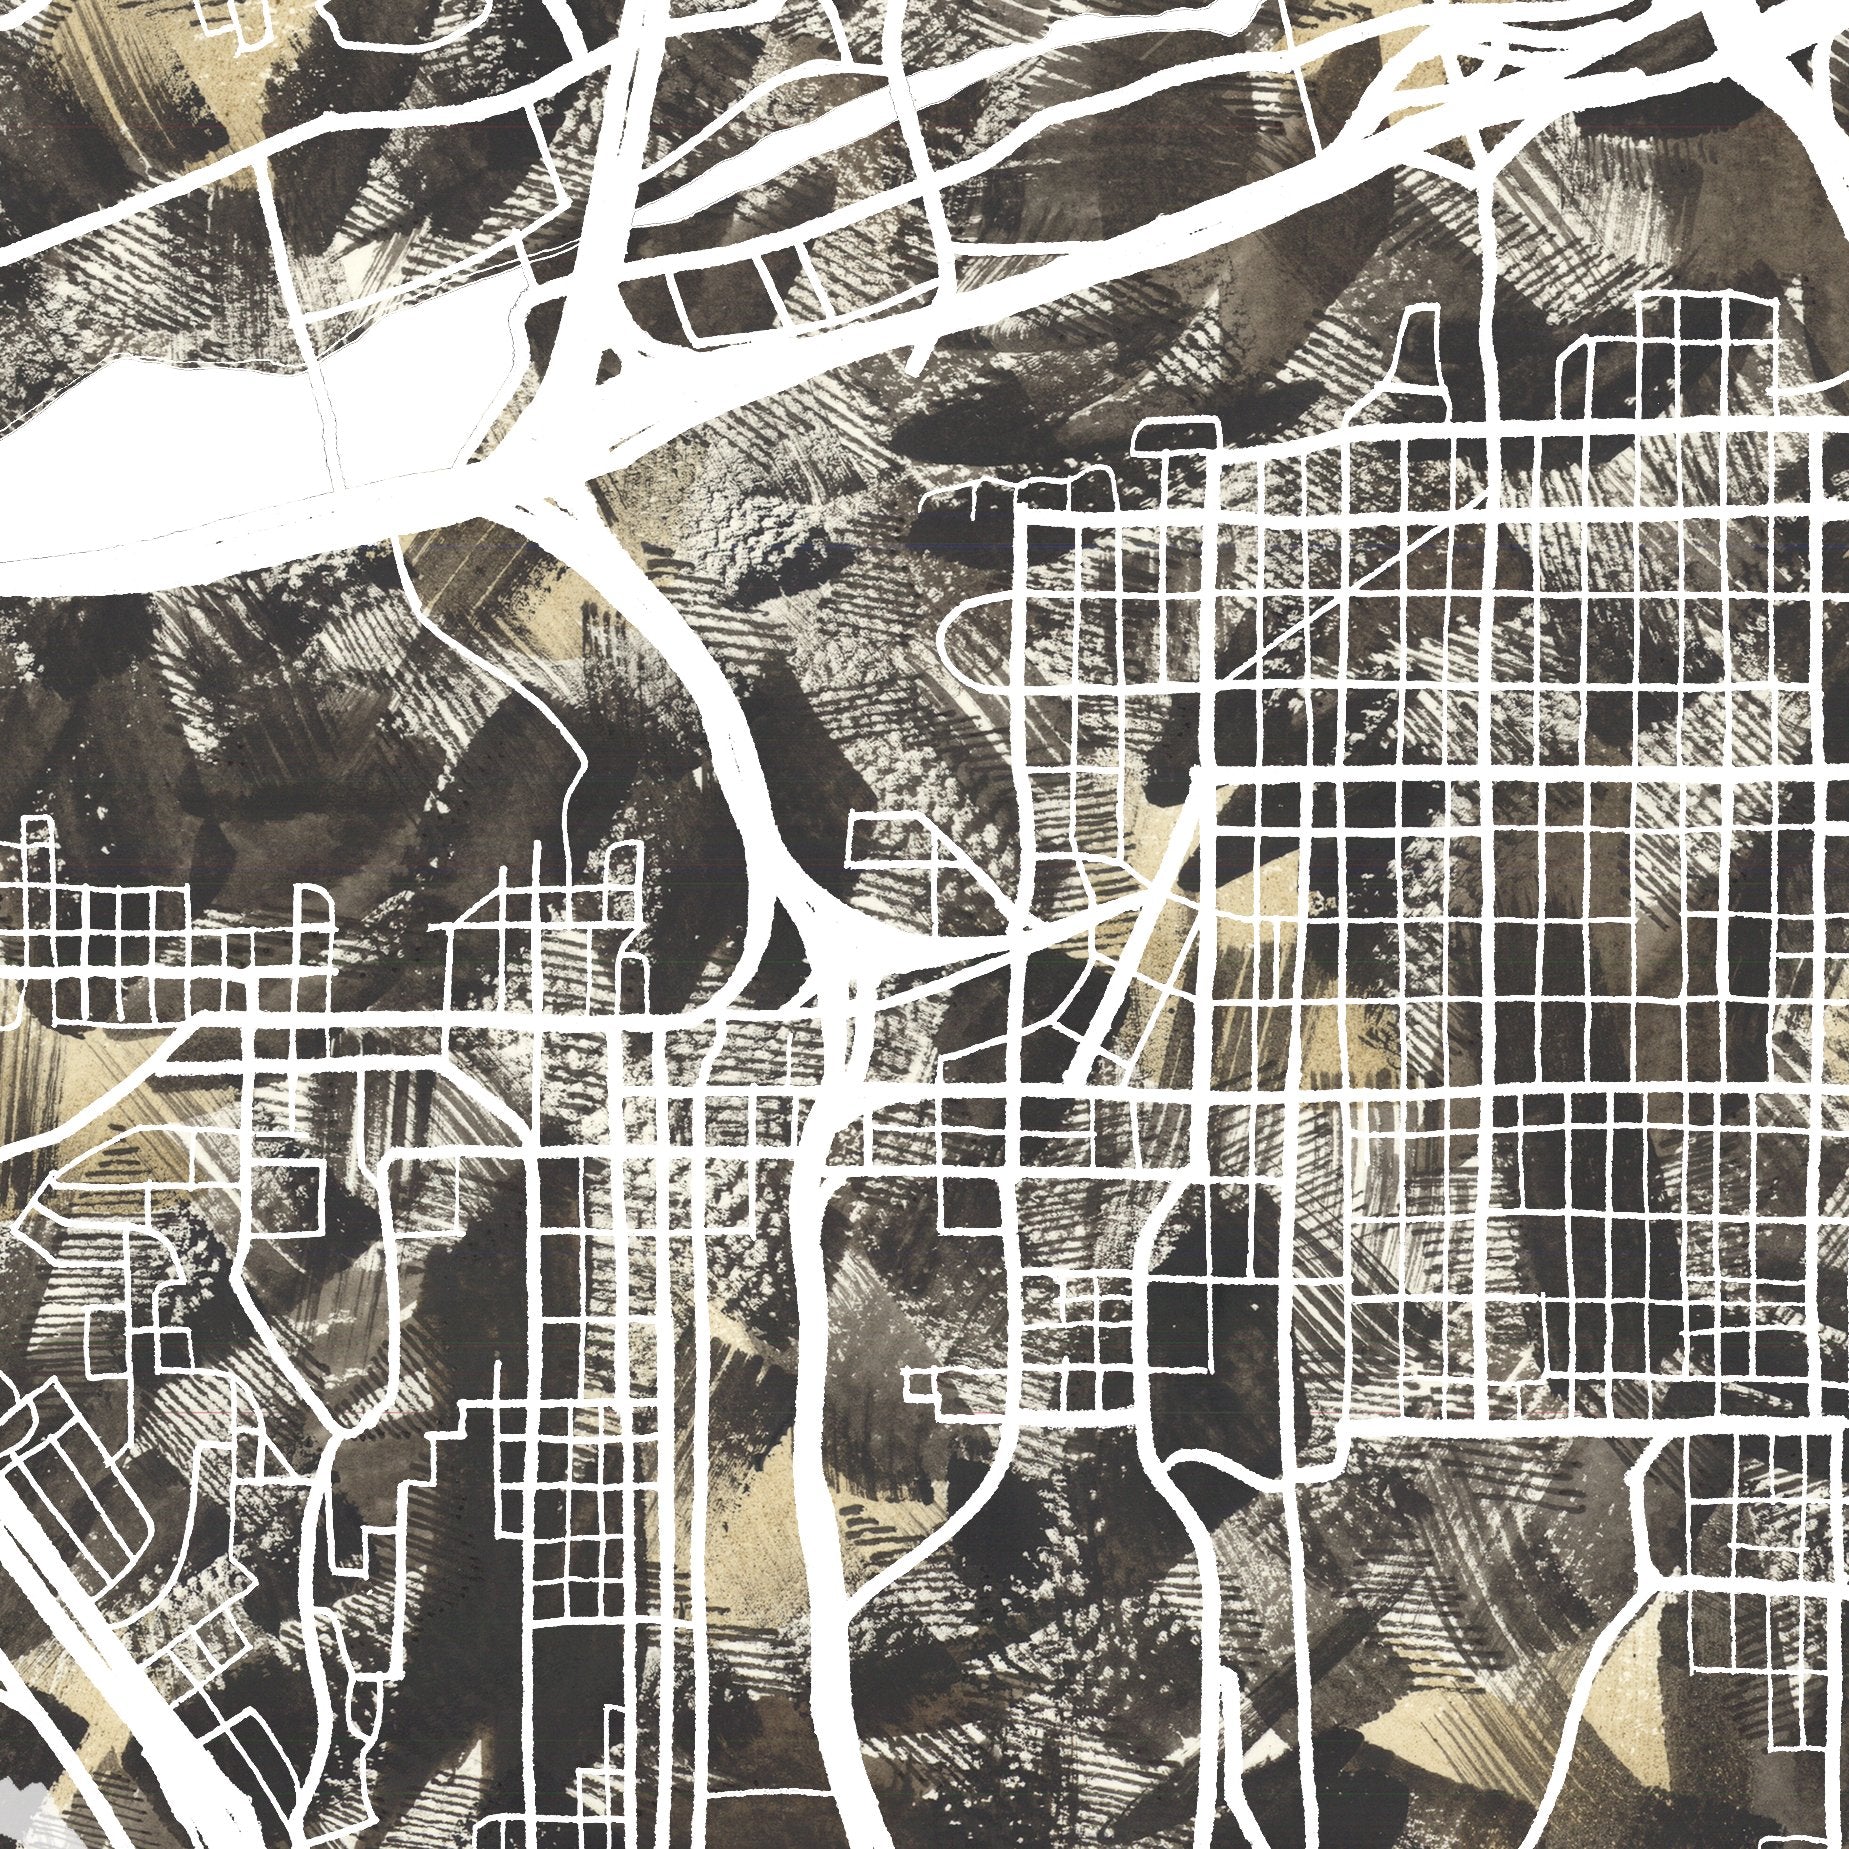 SAN DIEGO Urban Fabrics City Map: PRINT